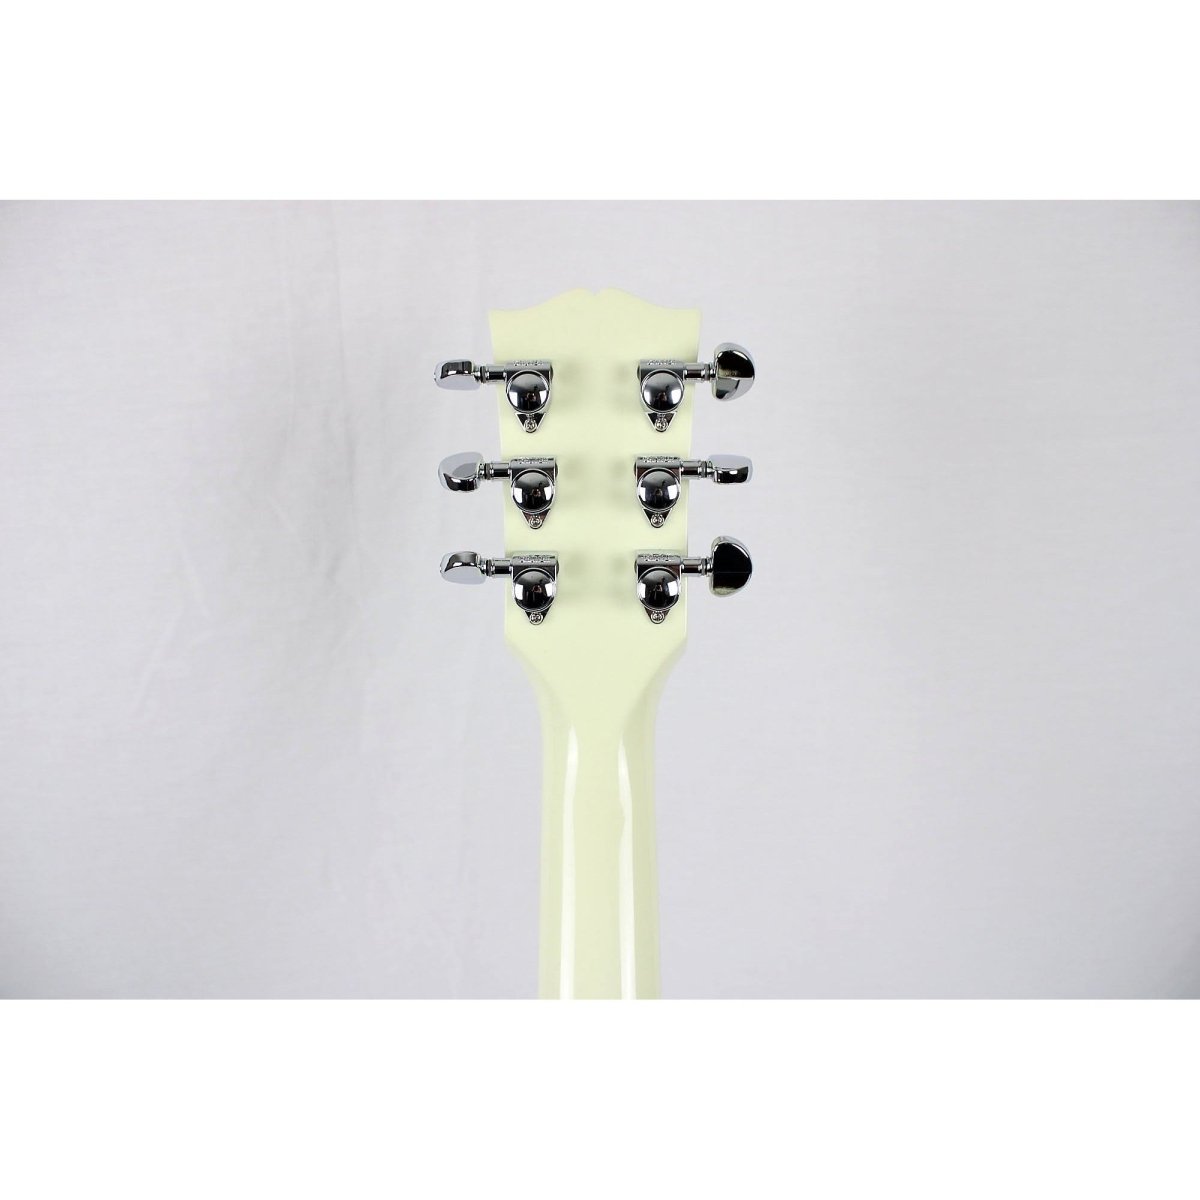 Gibson SG Standard - Classic White - Leitz Music-711106139227-SGS00CWCH1